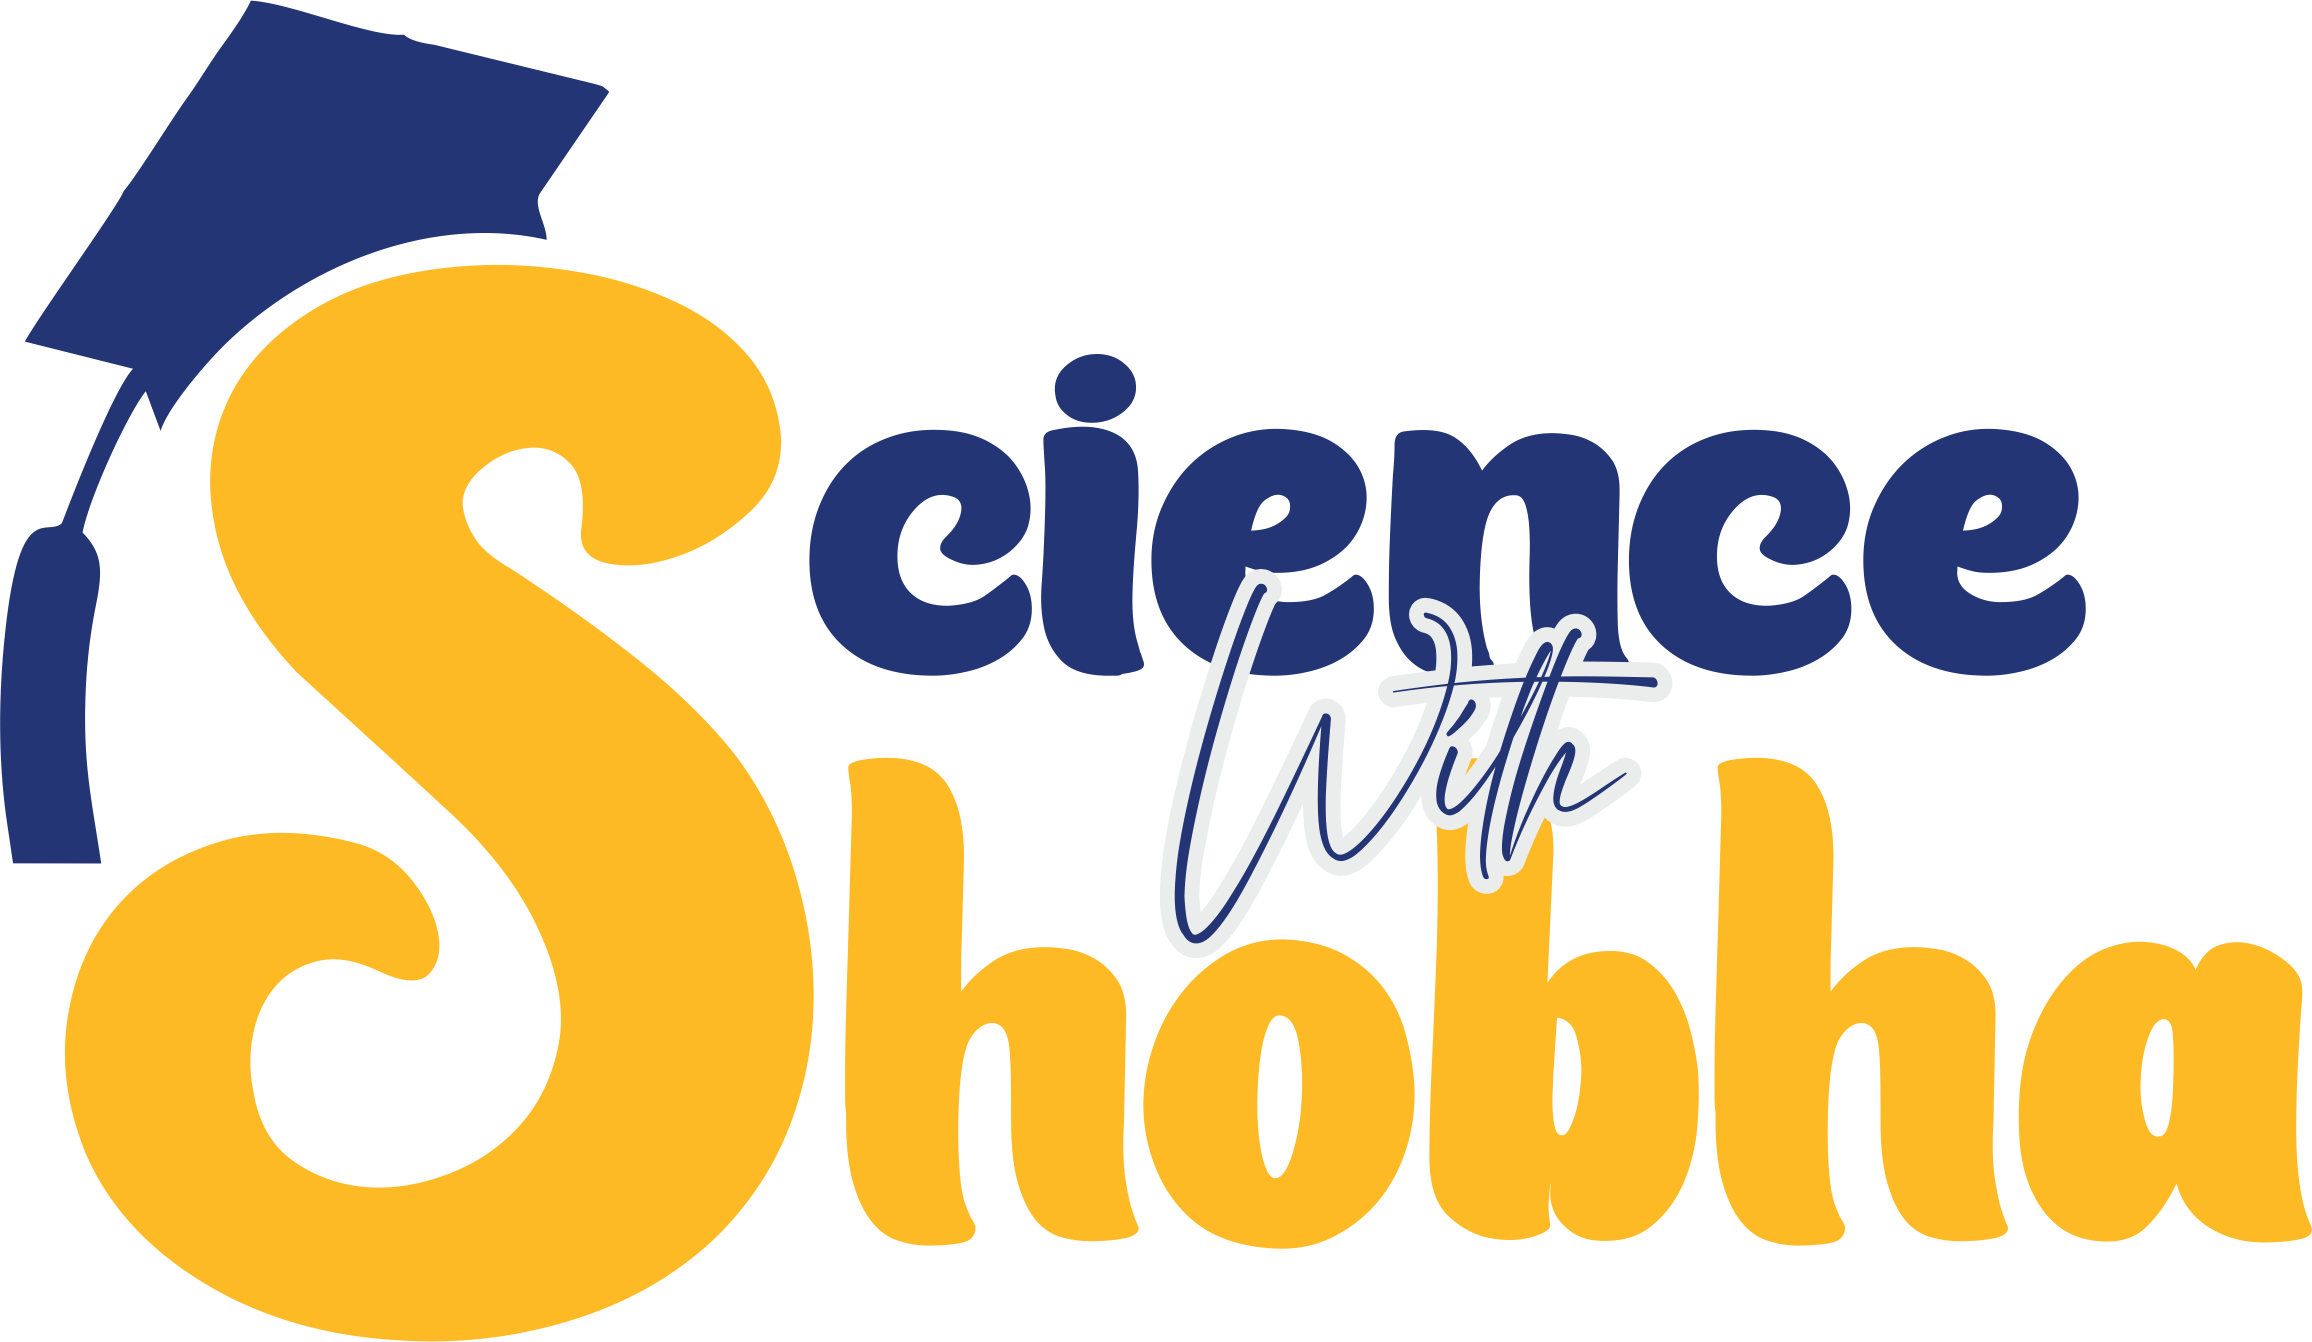 SciencewithShobha